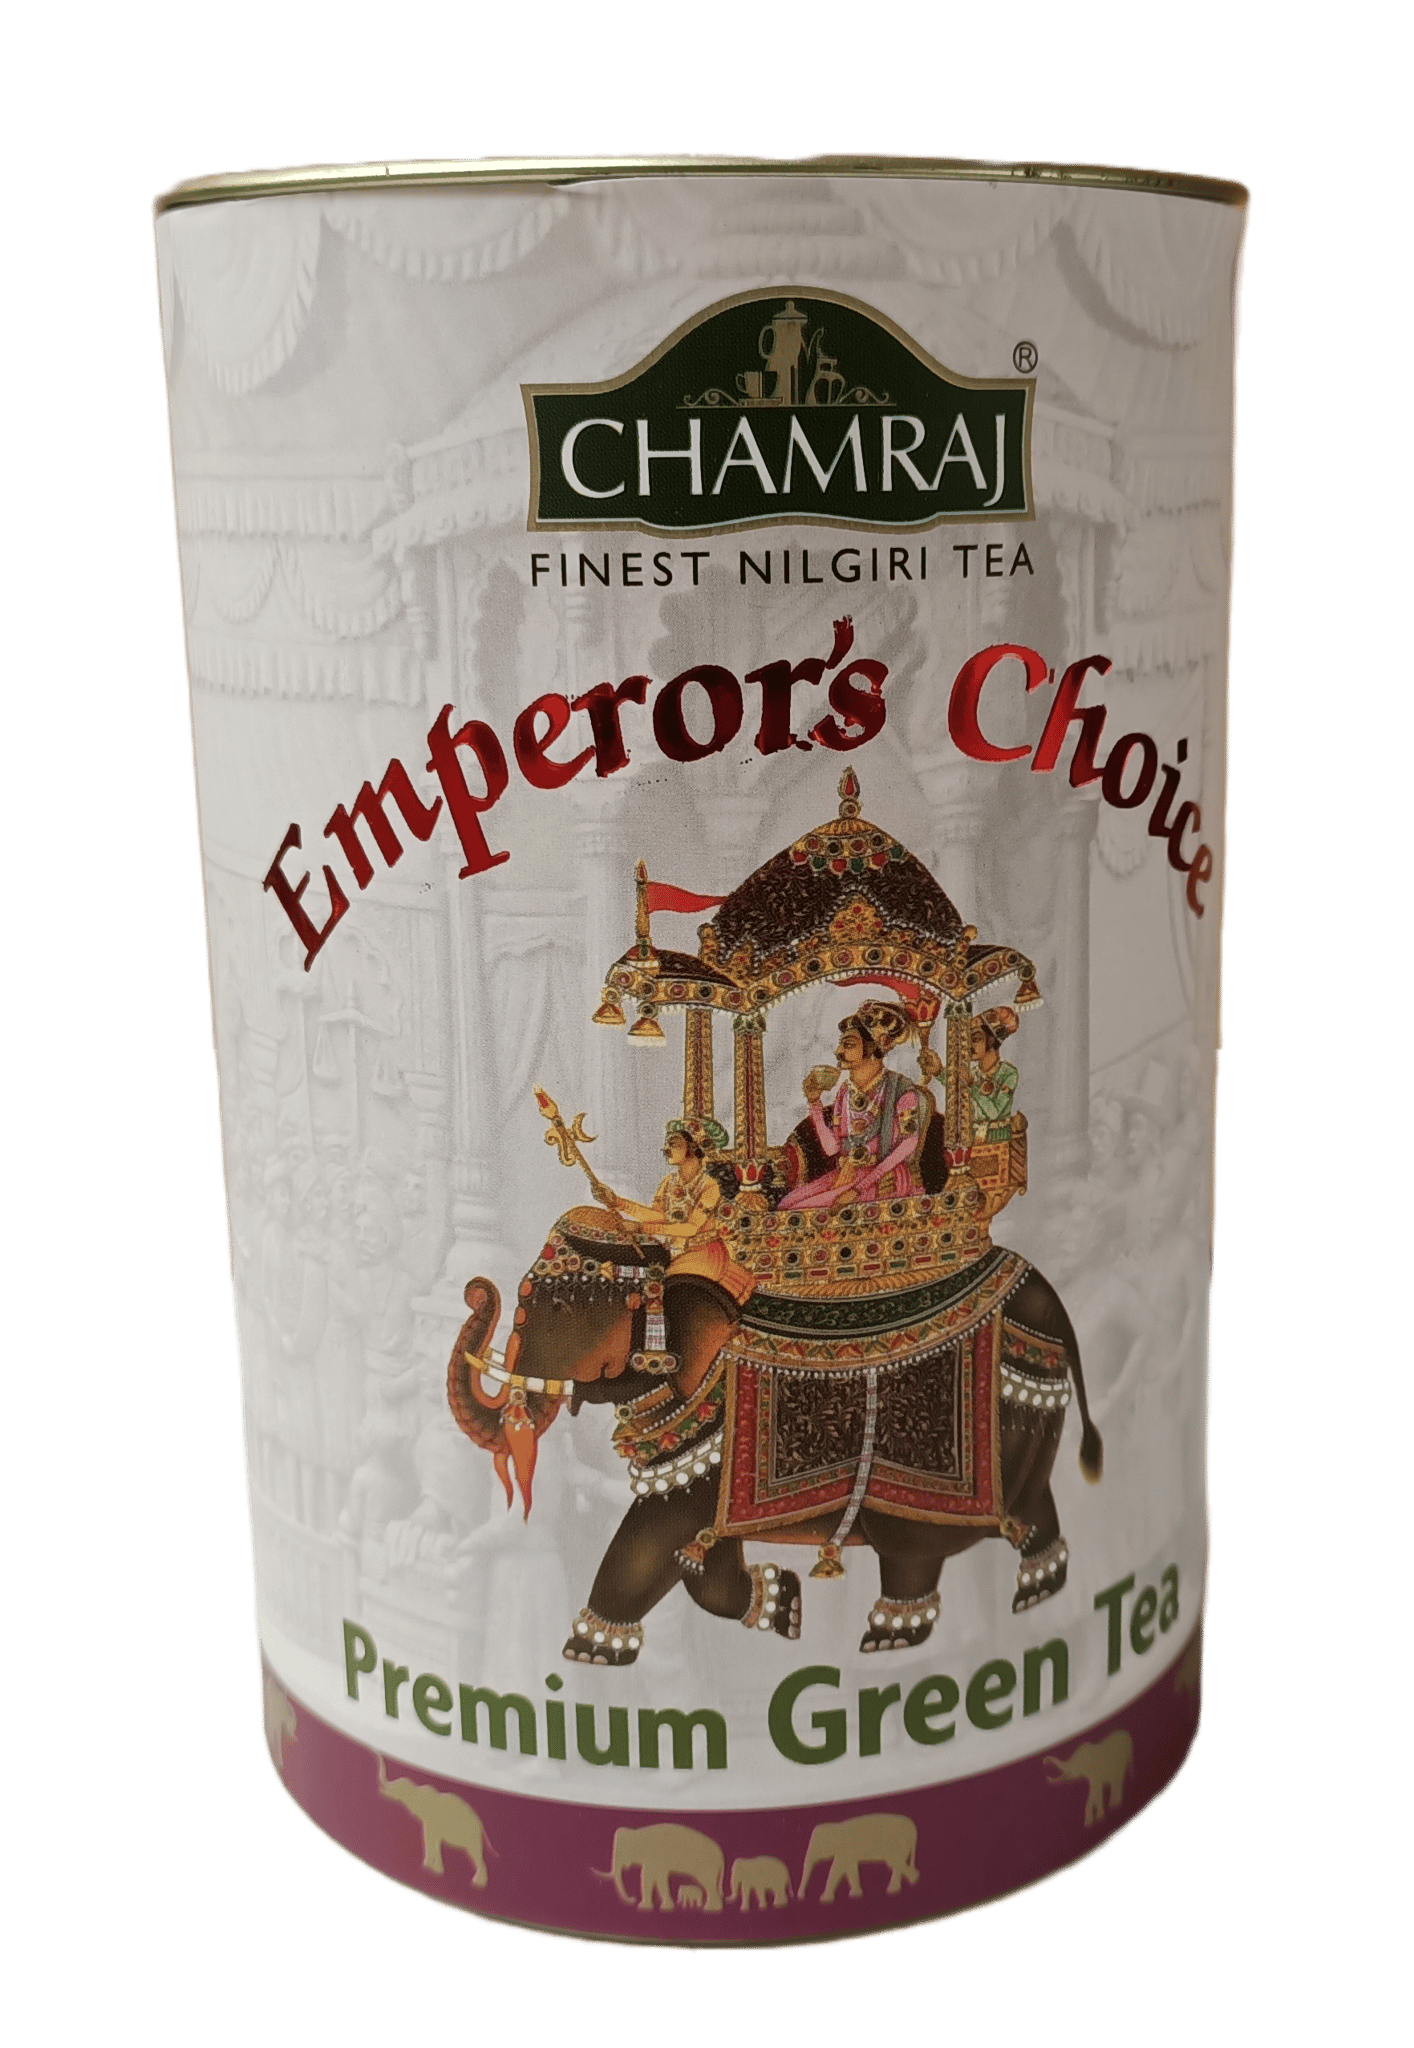 CHAMRAJ Emperor's Choice Premium Green Tea 100 g | Pack of 1 | Total 100 g | Chamraj Finest Nilgiri Tea